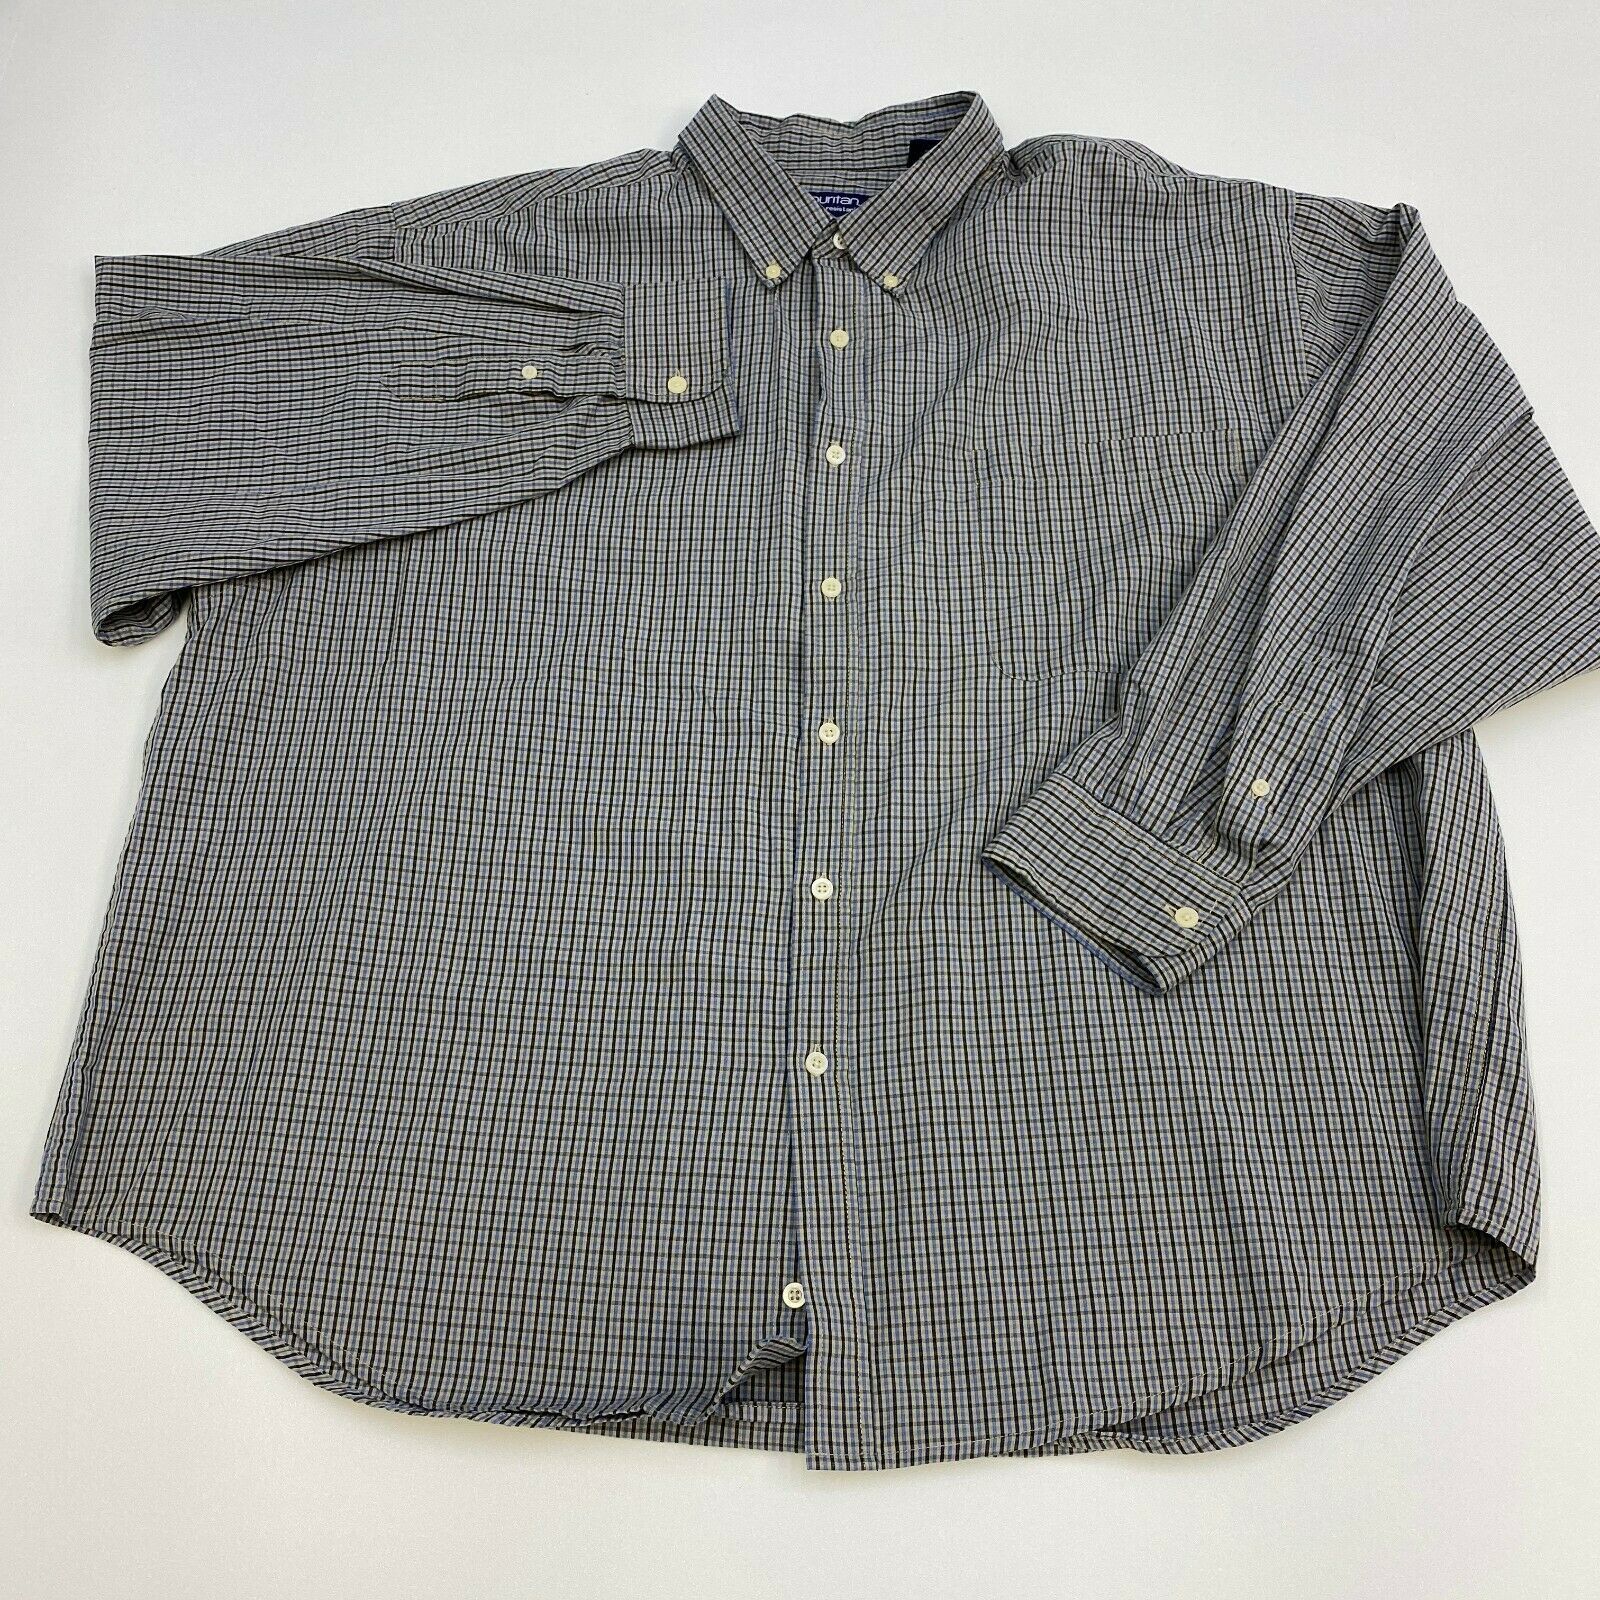 Puritan Button Up Shirt Mens 3XL Multicolor Check Wrinkle Resistant ...